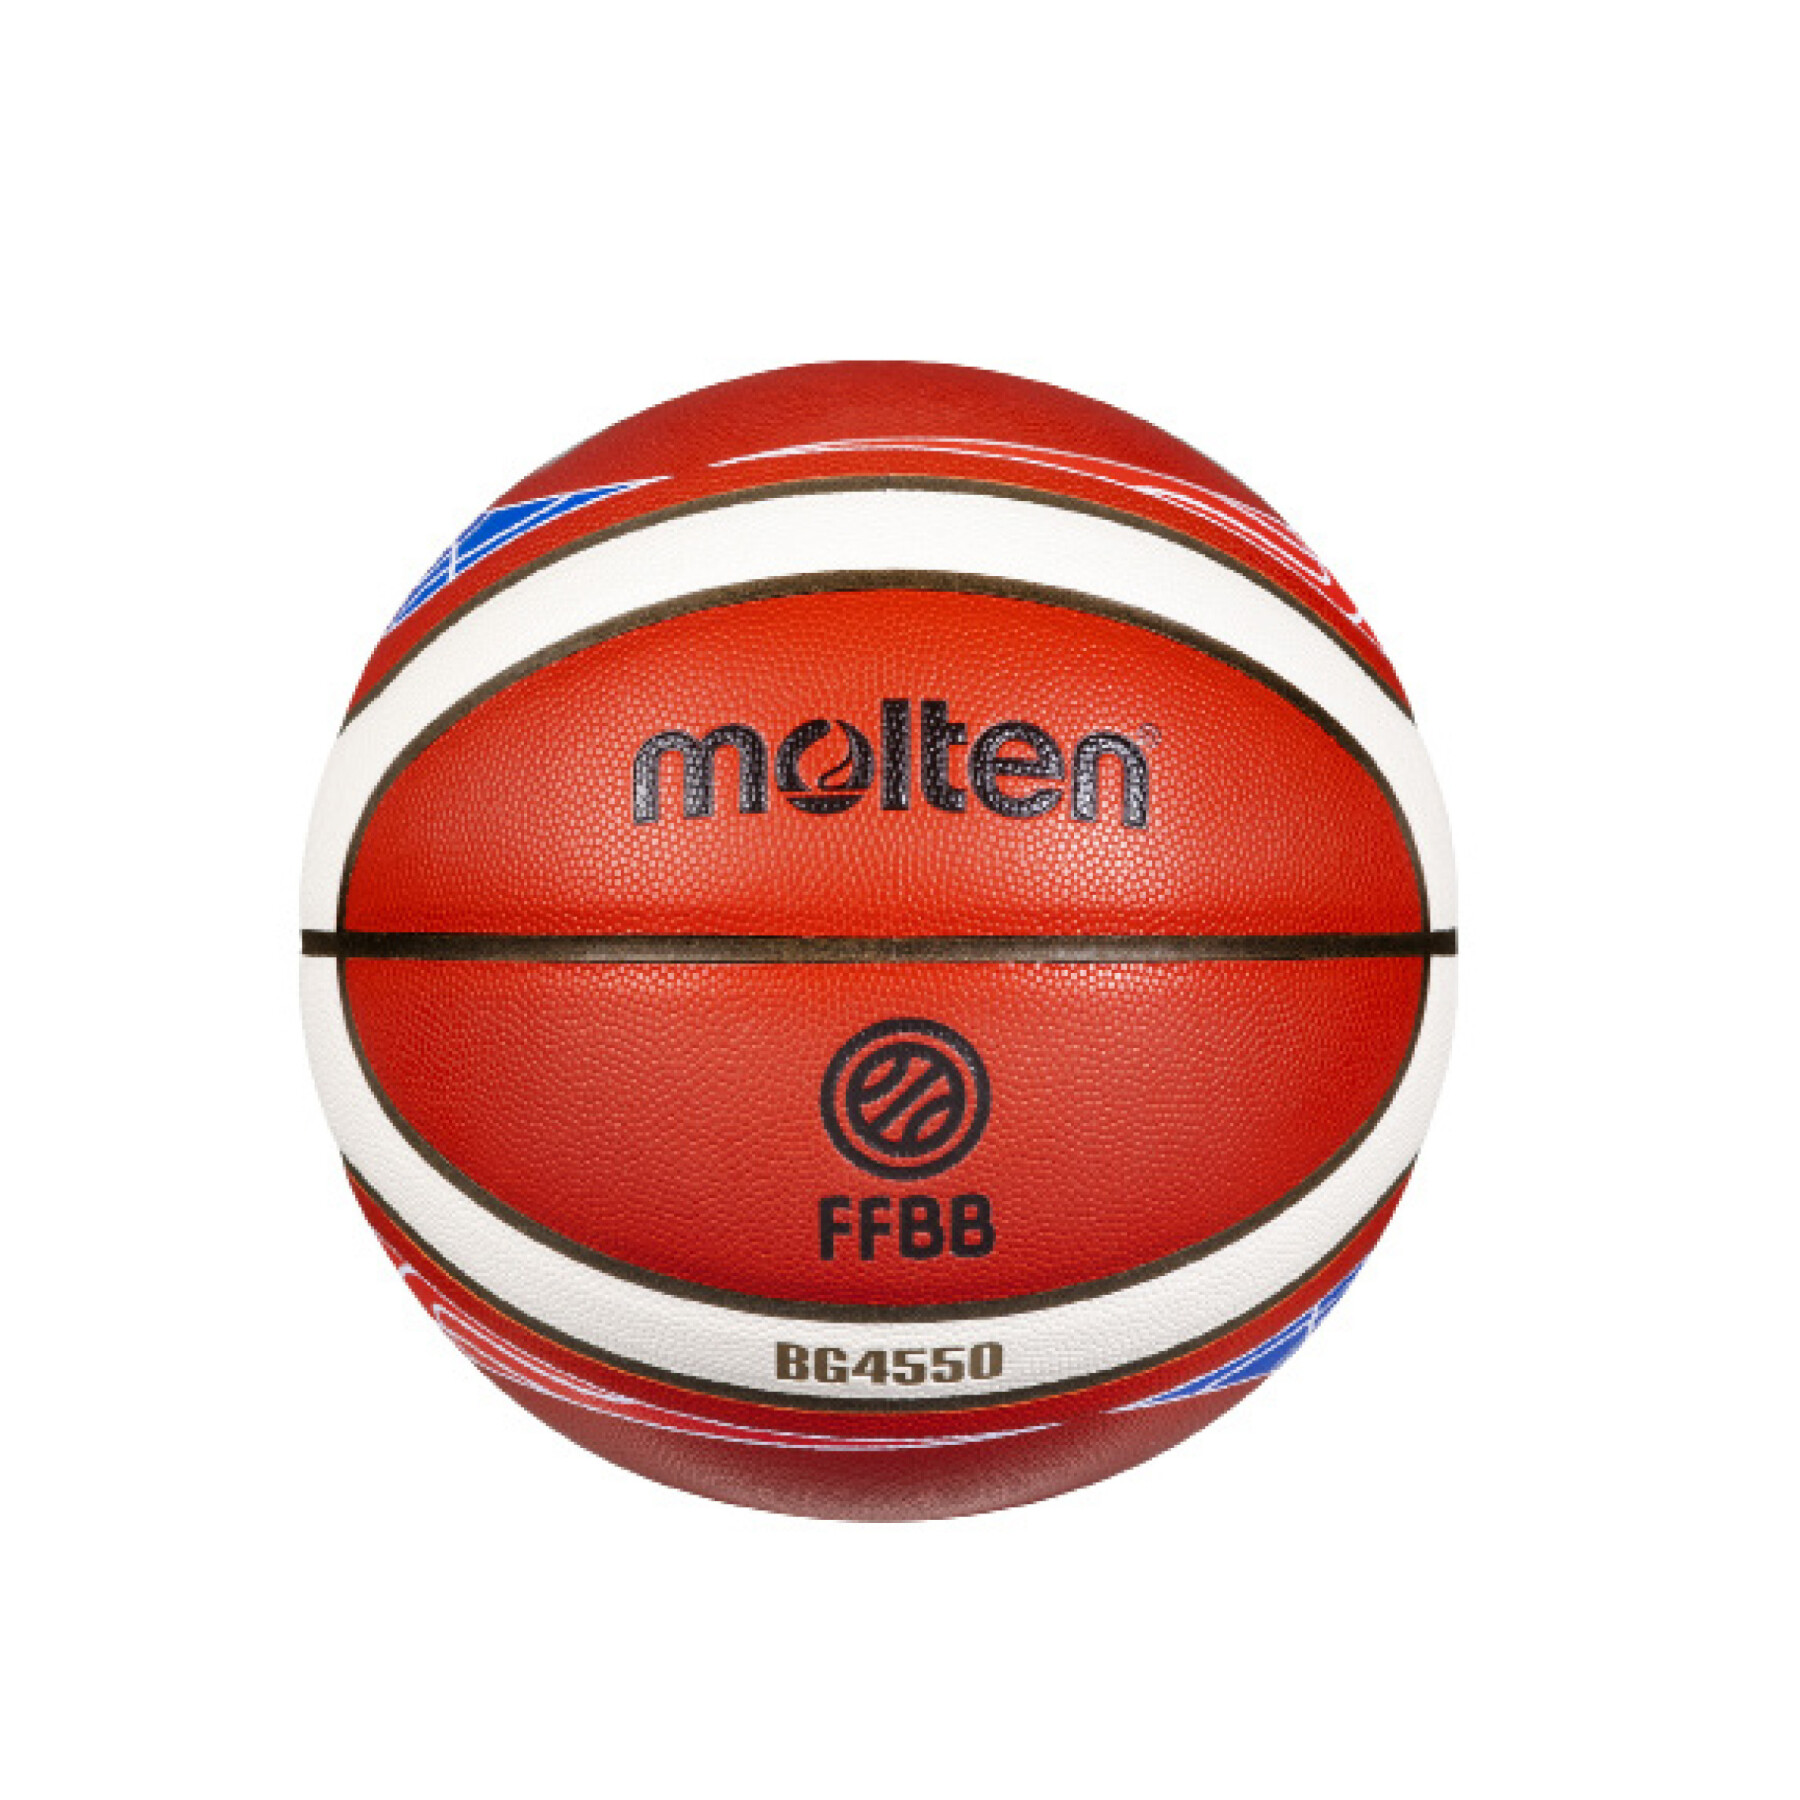 Ballon Molten Compet FFBB BG4550 T6